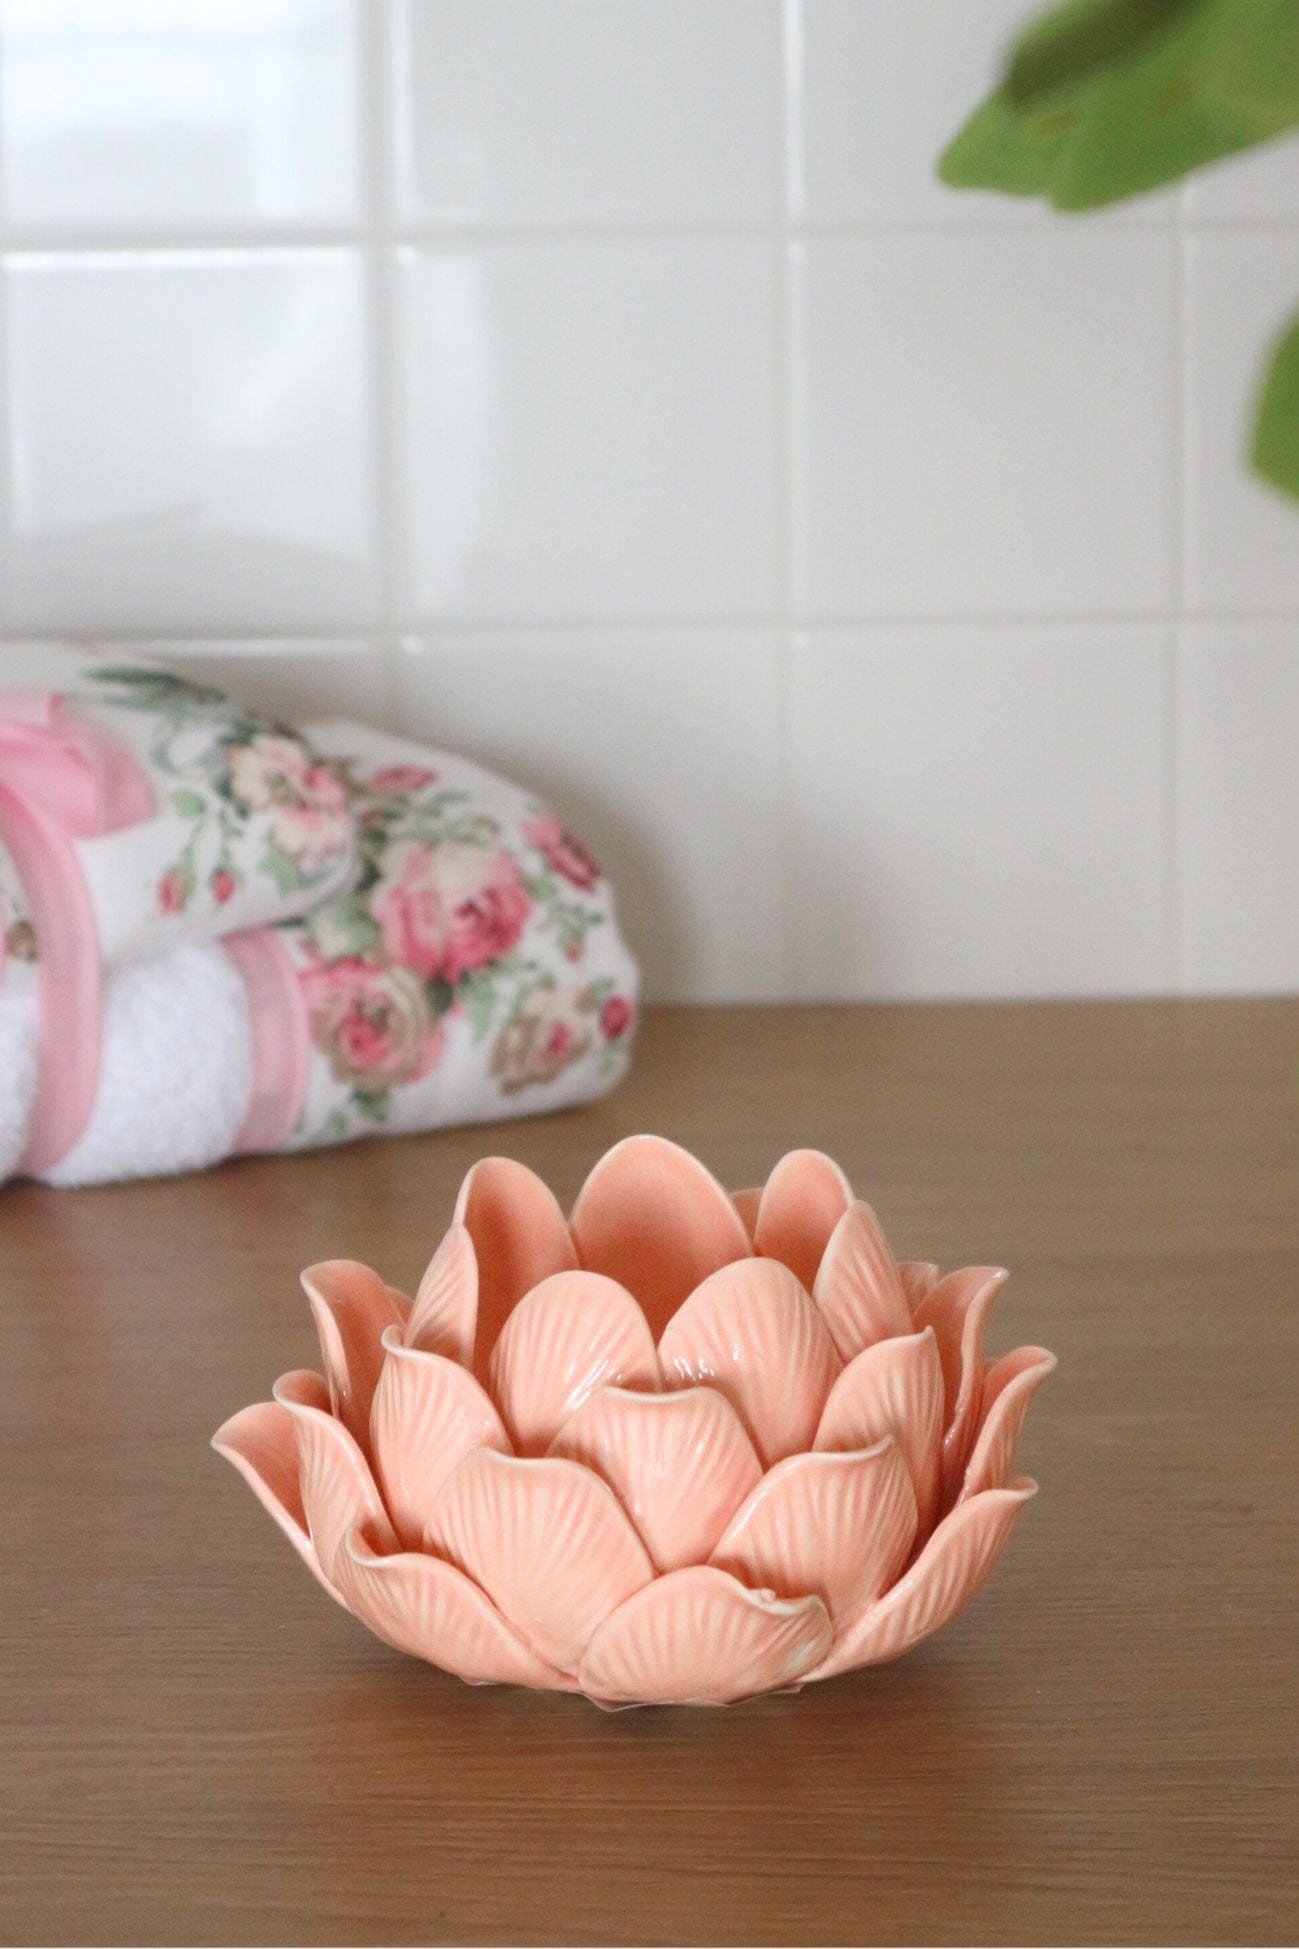 Item International Cirilla Cirilla - Portacandela con petali in ceramica rosa | Item International